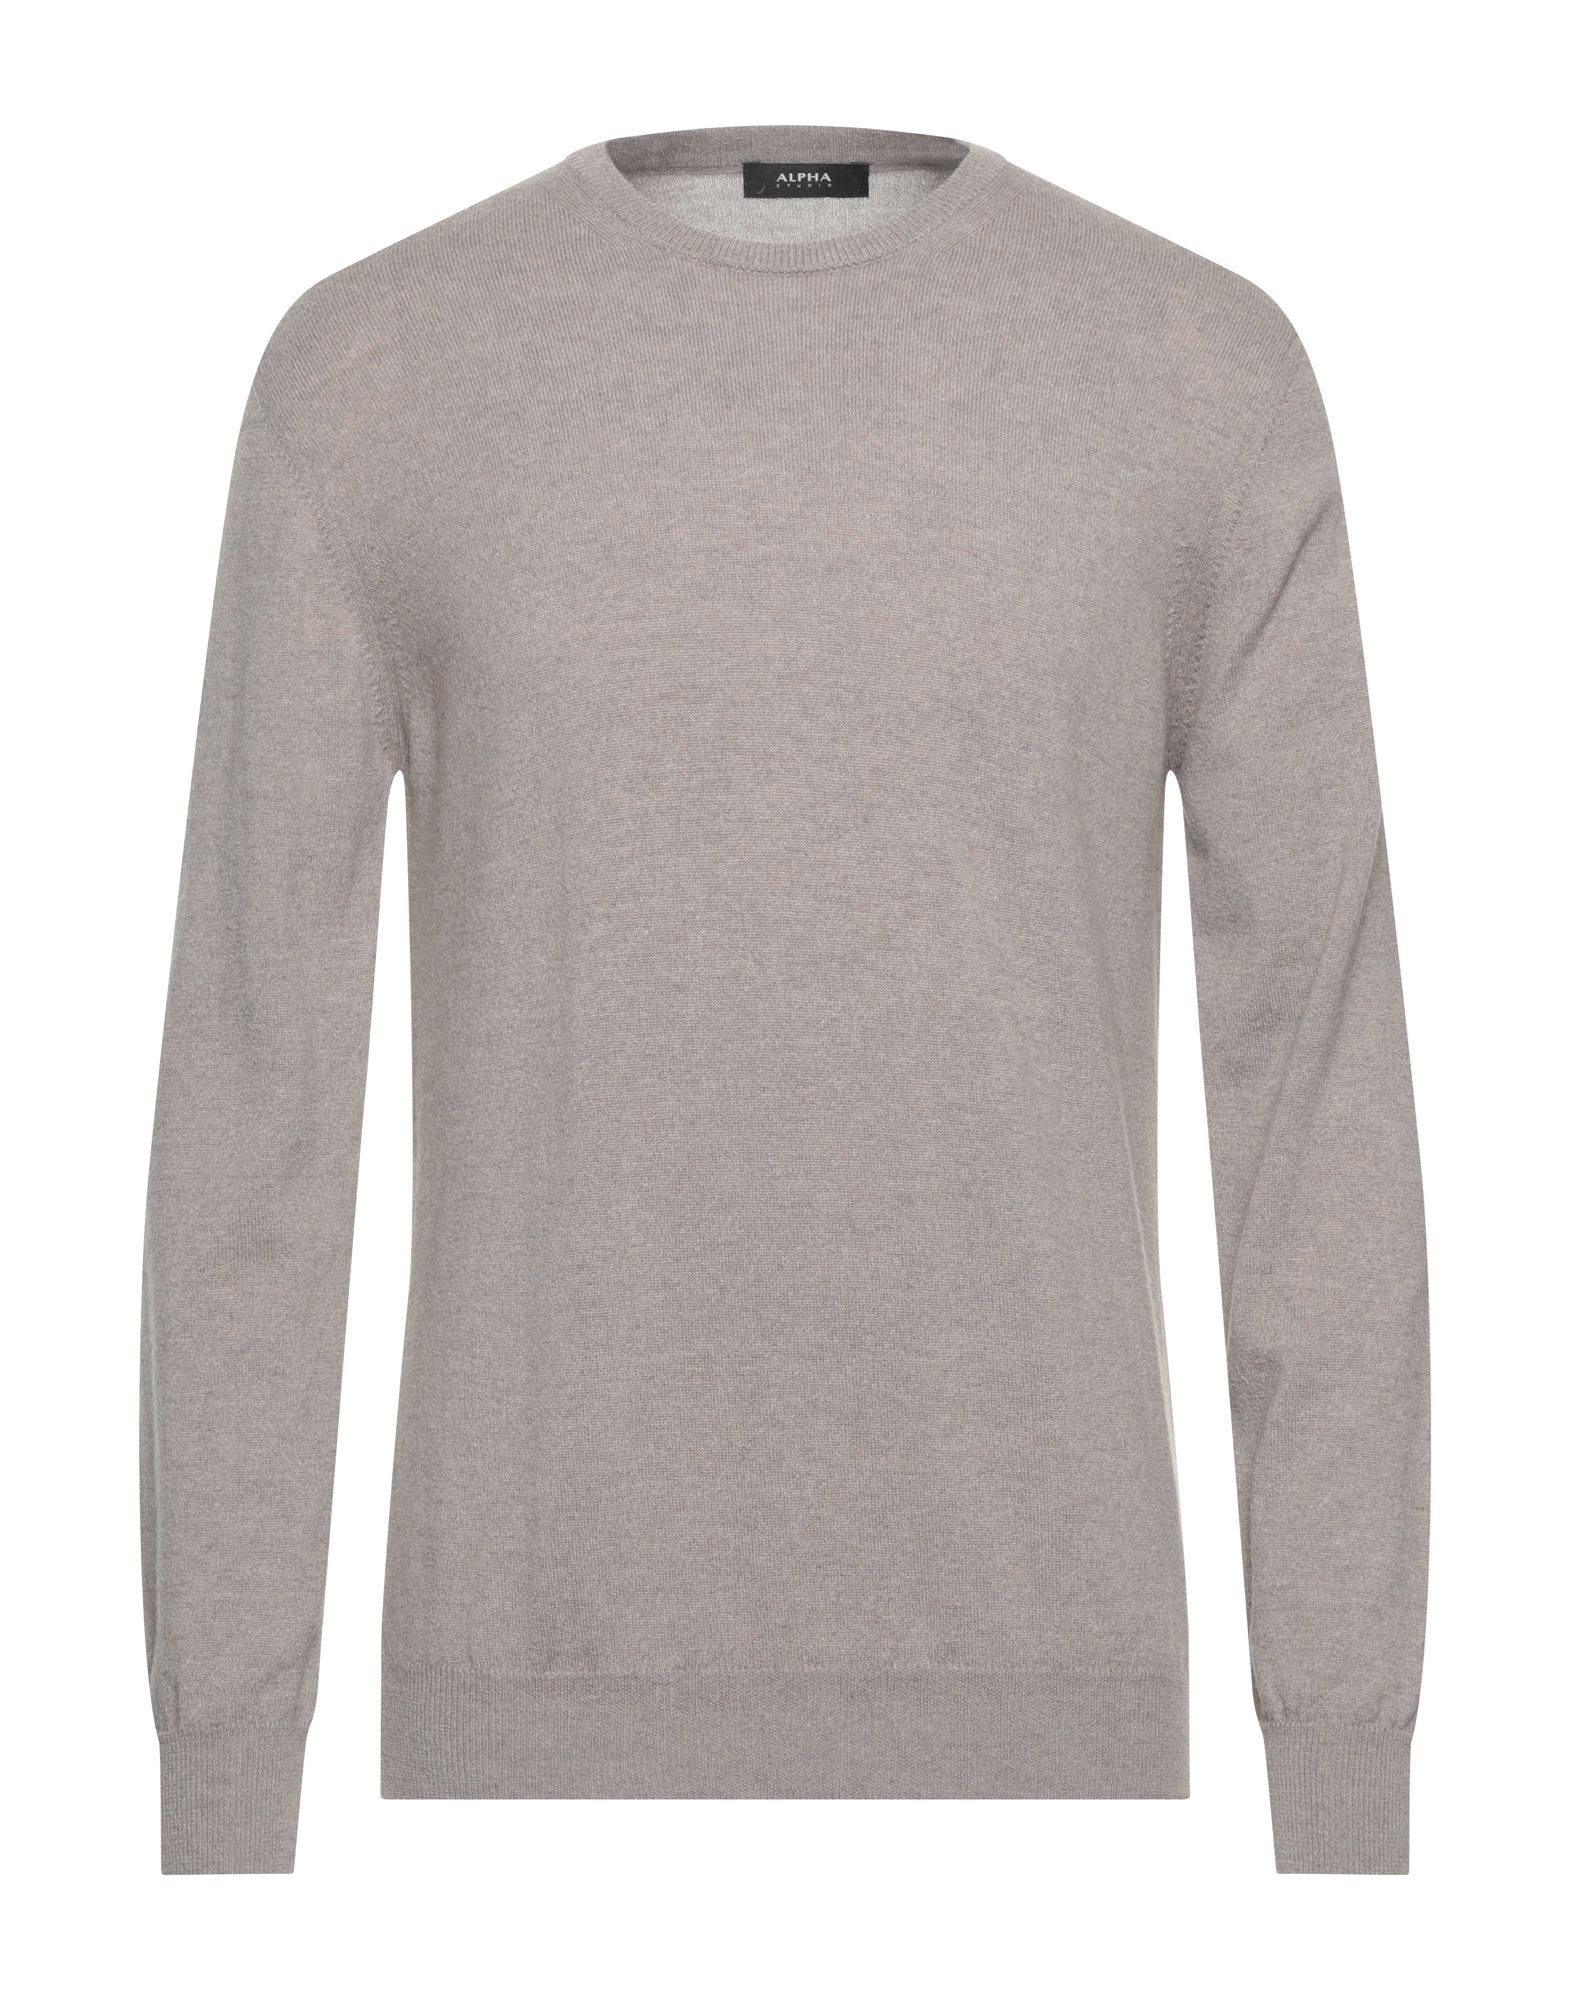 Alpha Studio Sweaters In Light Grey